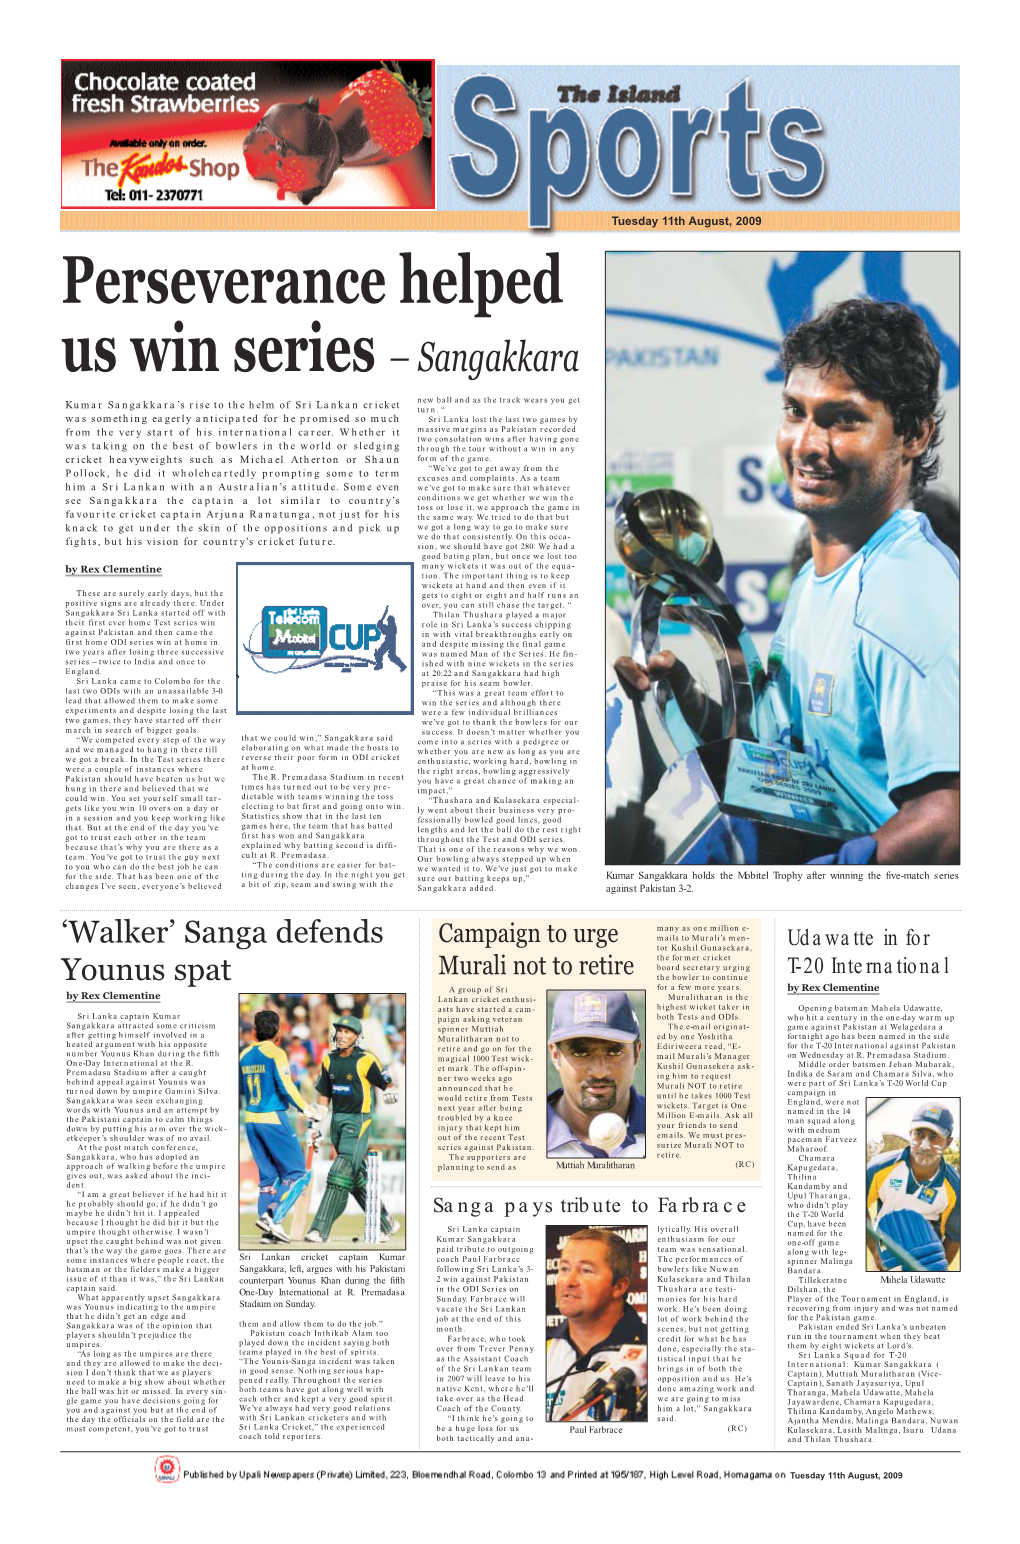 Perseverance Helped Us Win Series – Sangakkara